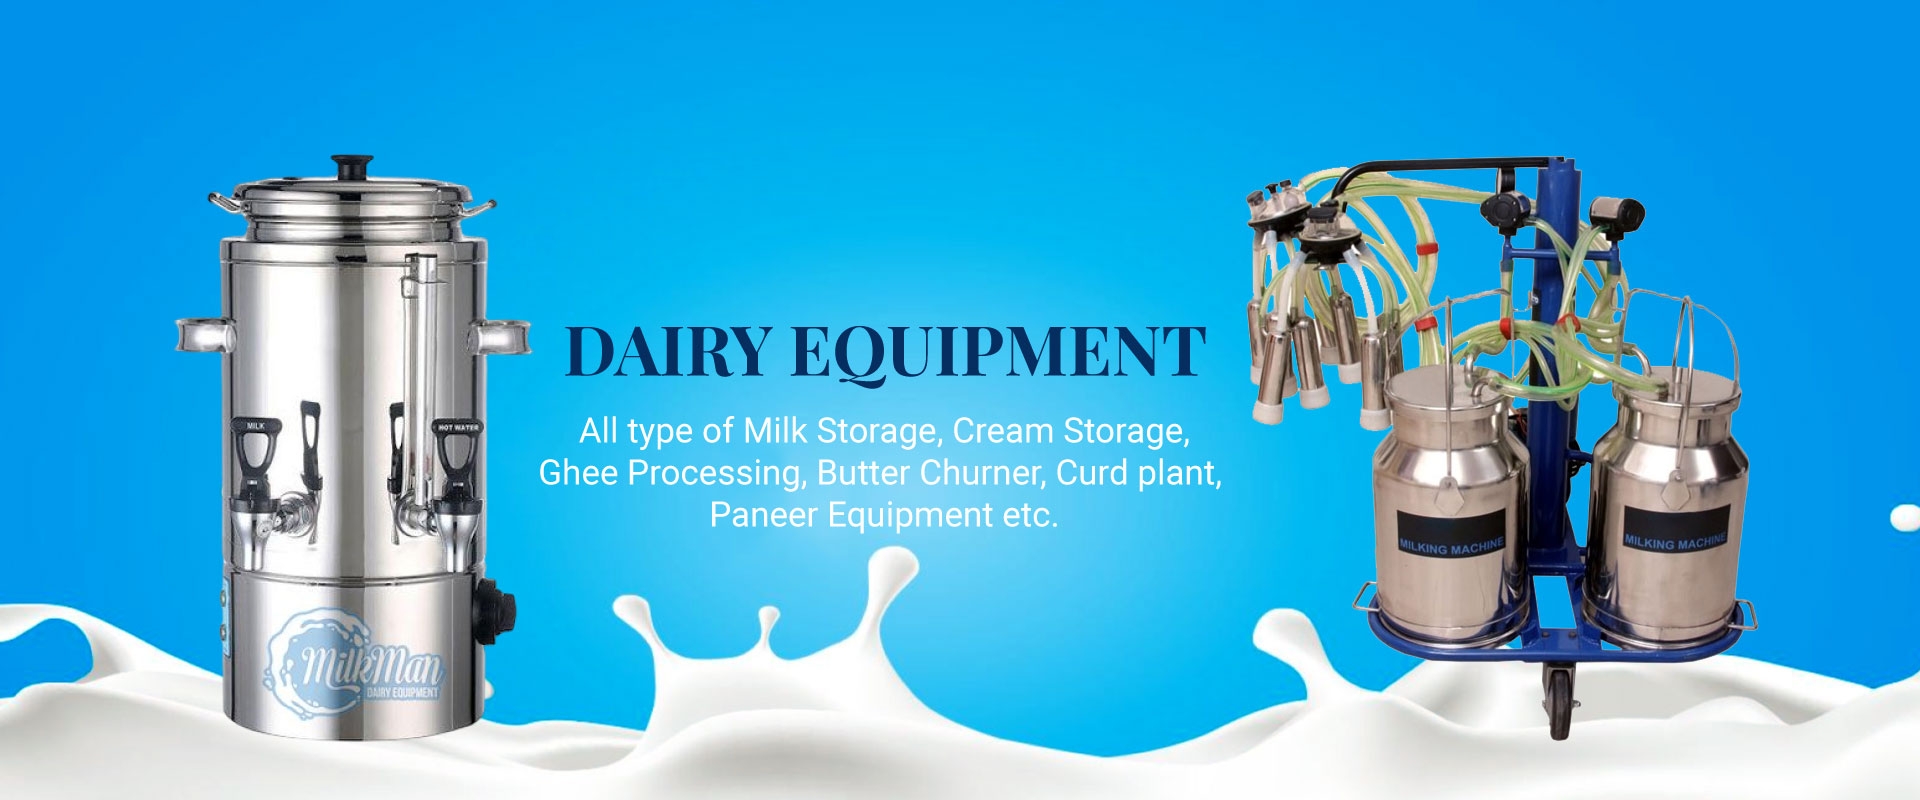 Dairy Equipment Manufacturers in Punjab